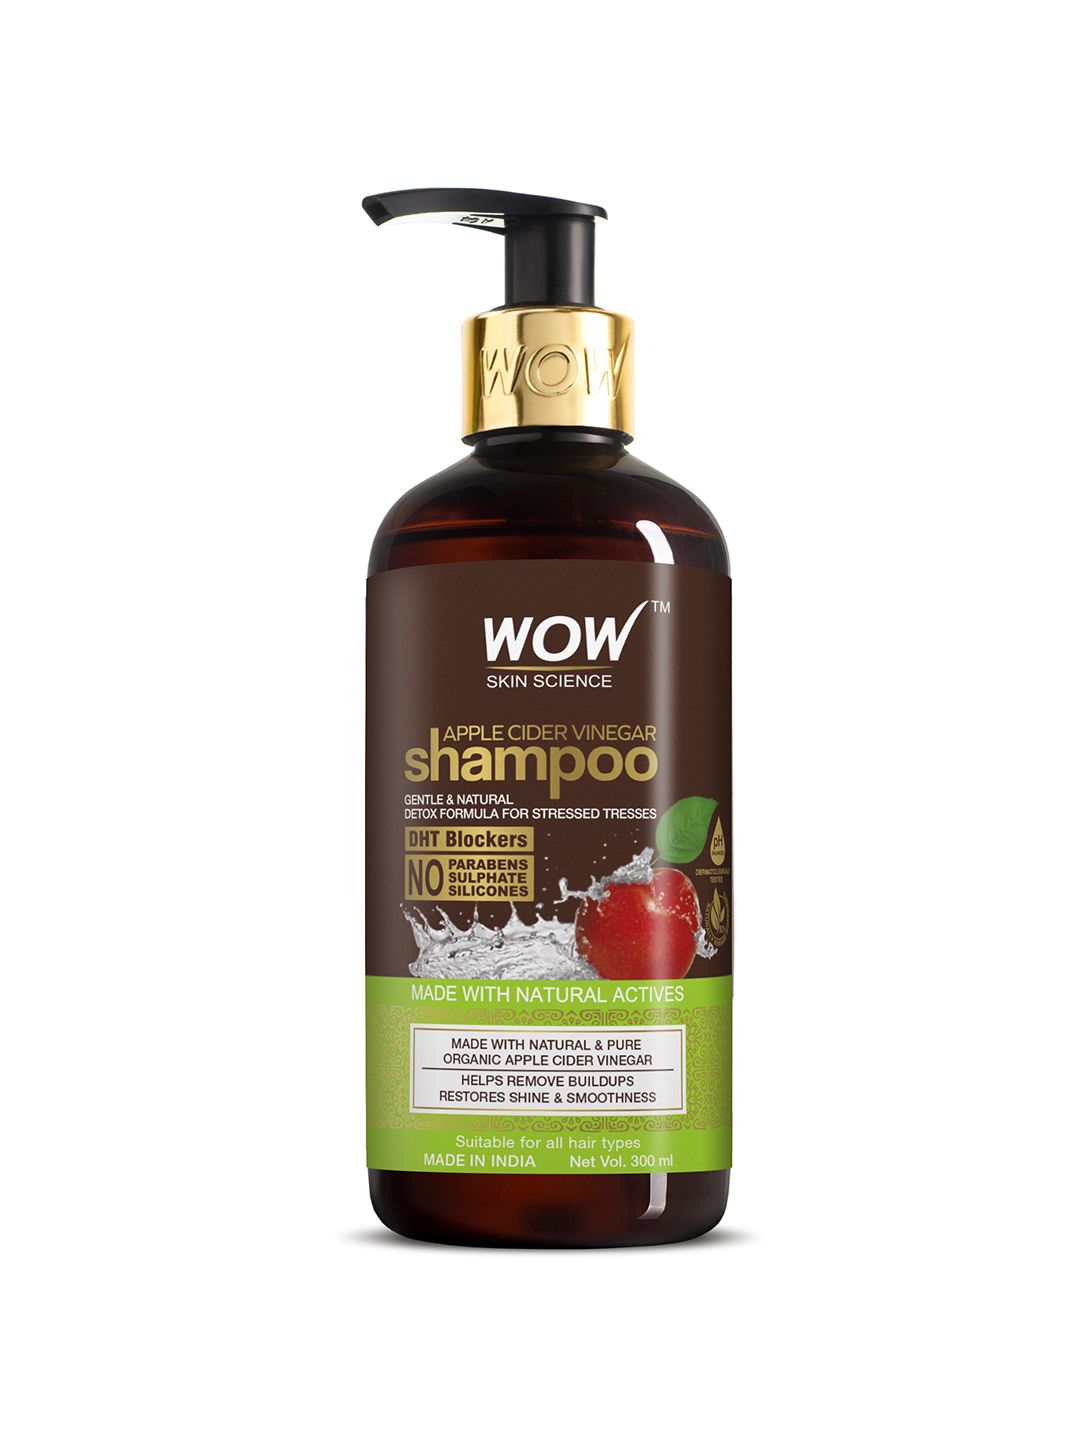 WOW SKIN SCIENCE Apple Cider Vinegar Shampoo Restores Shine-No Parabens, Sulphates - 300ml Price in India